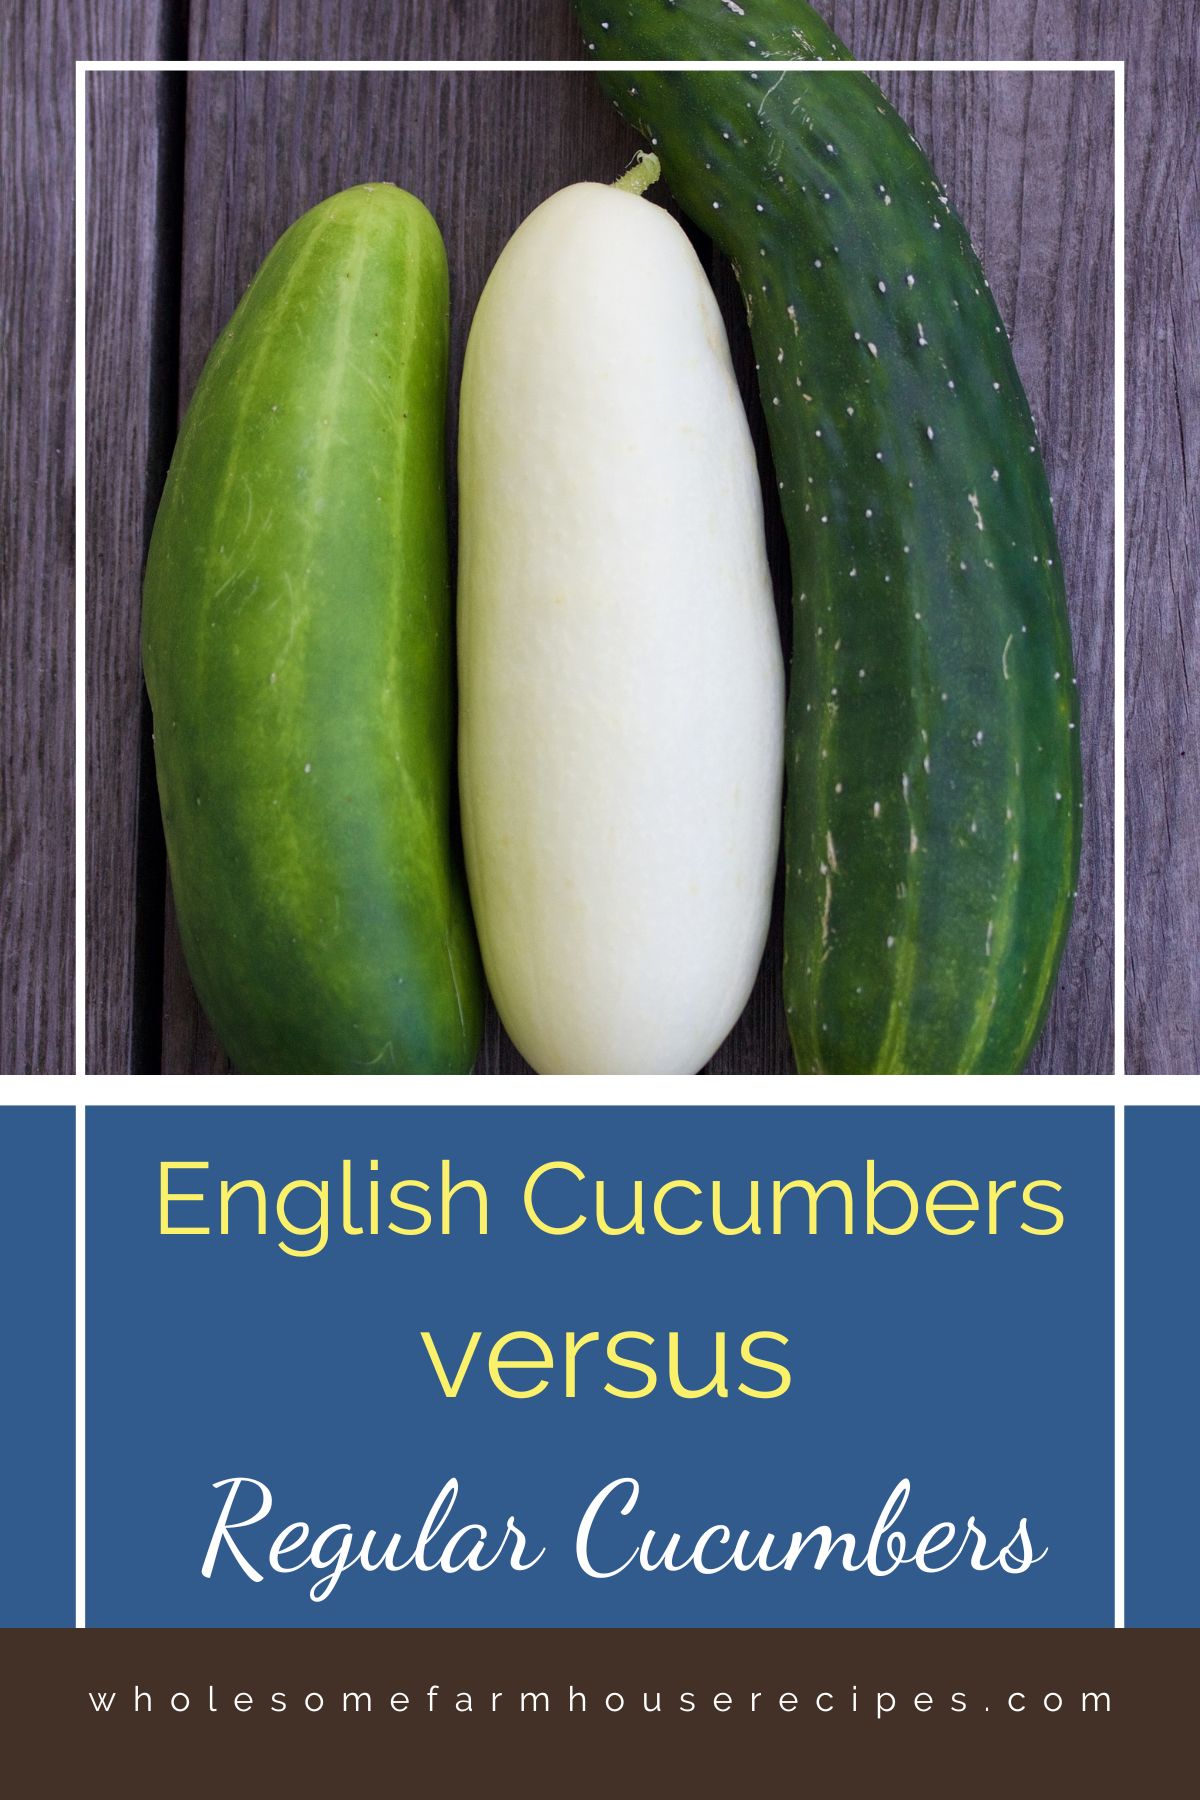 English Cucumbers versus Regular Cucumbers